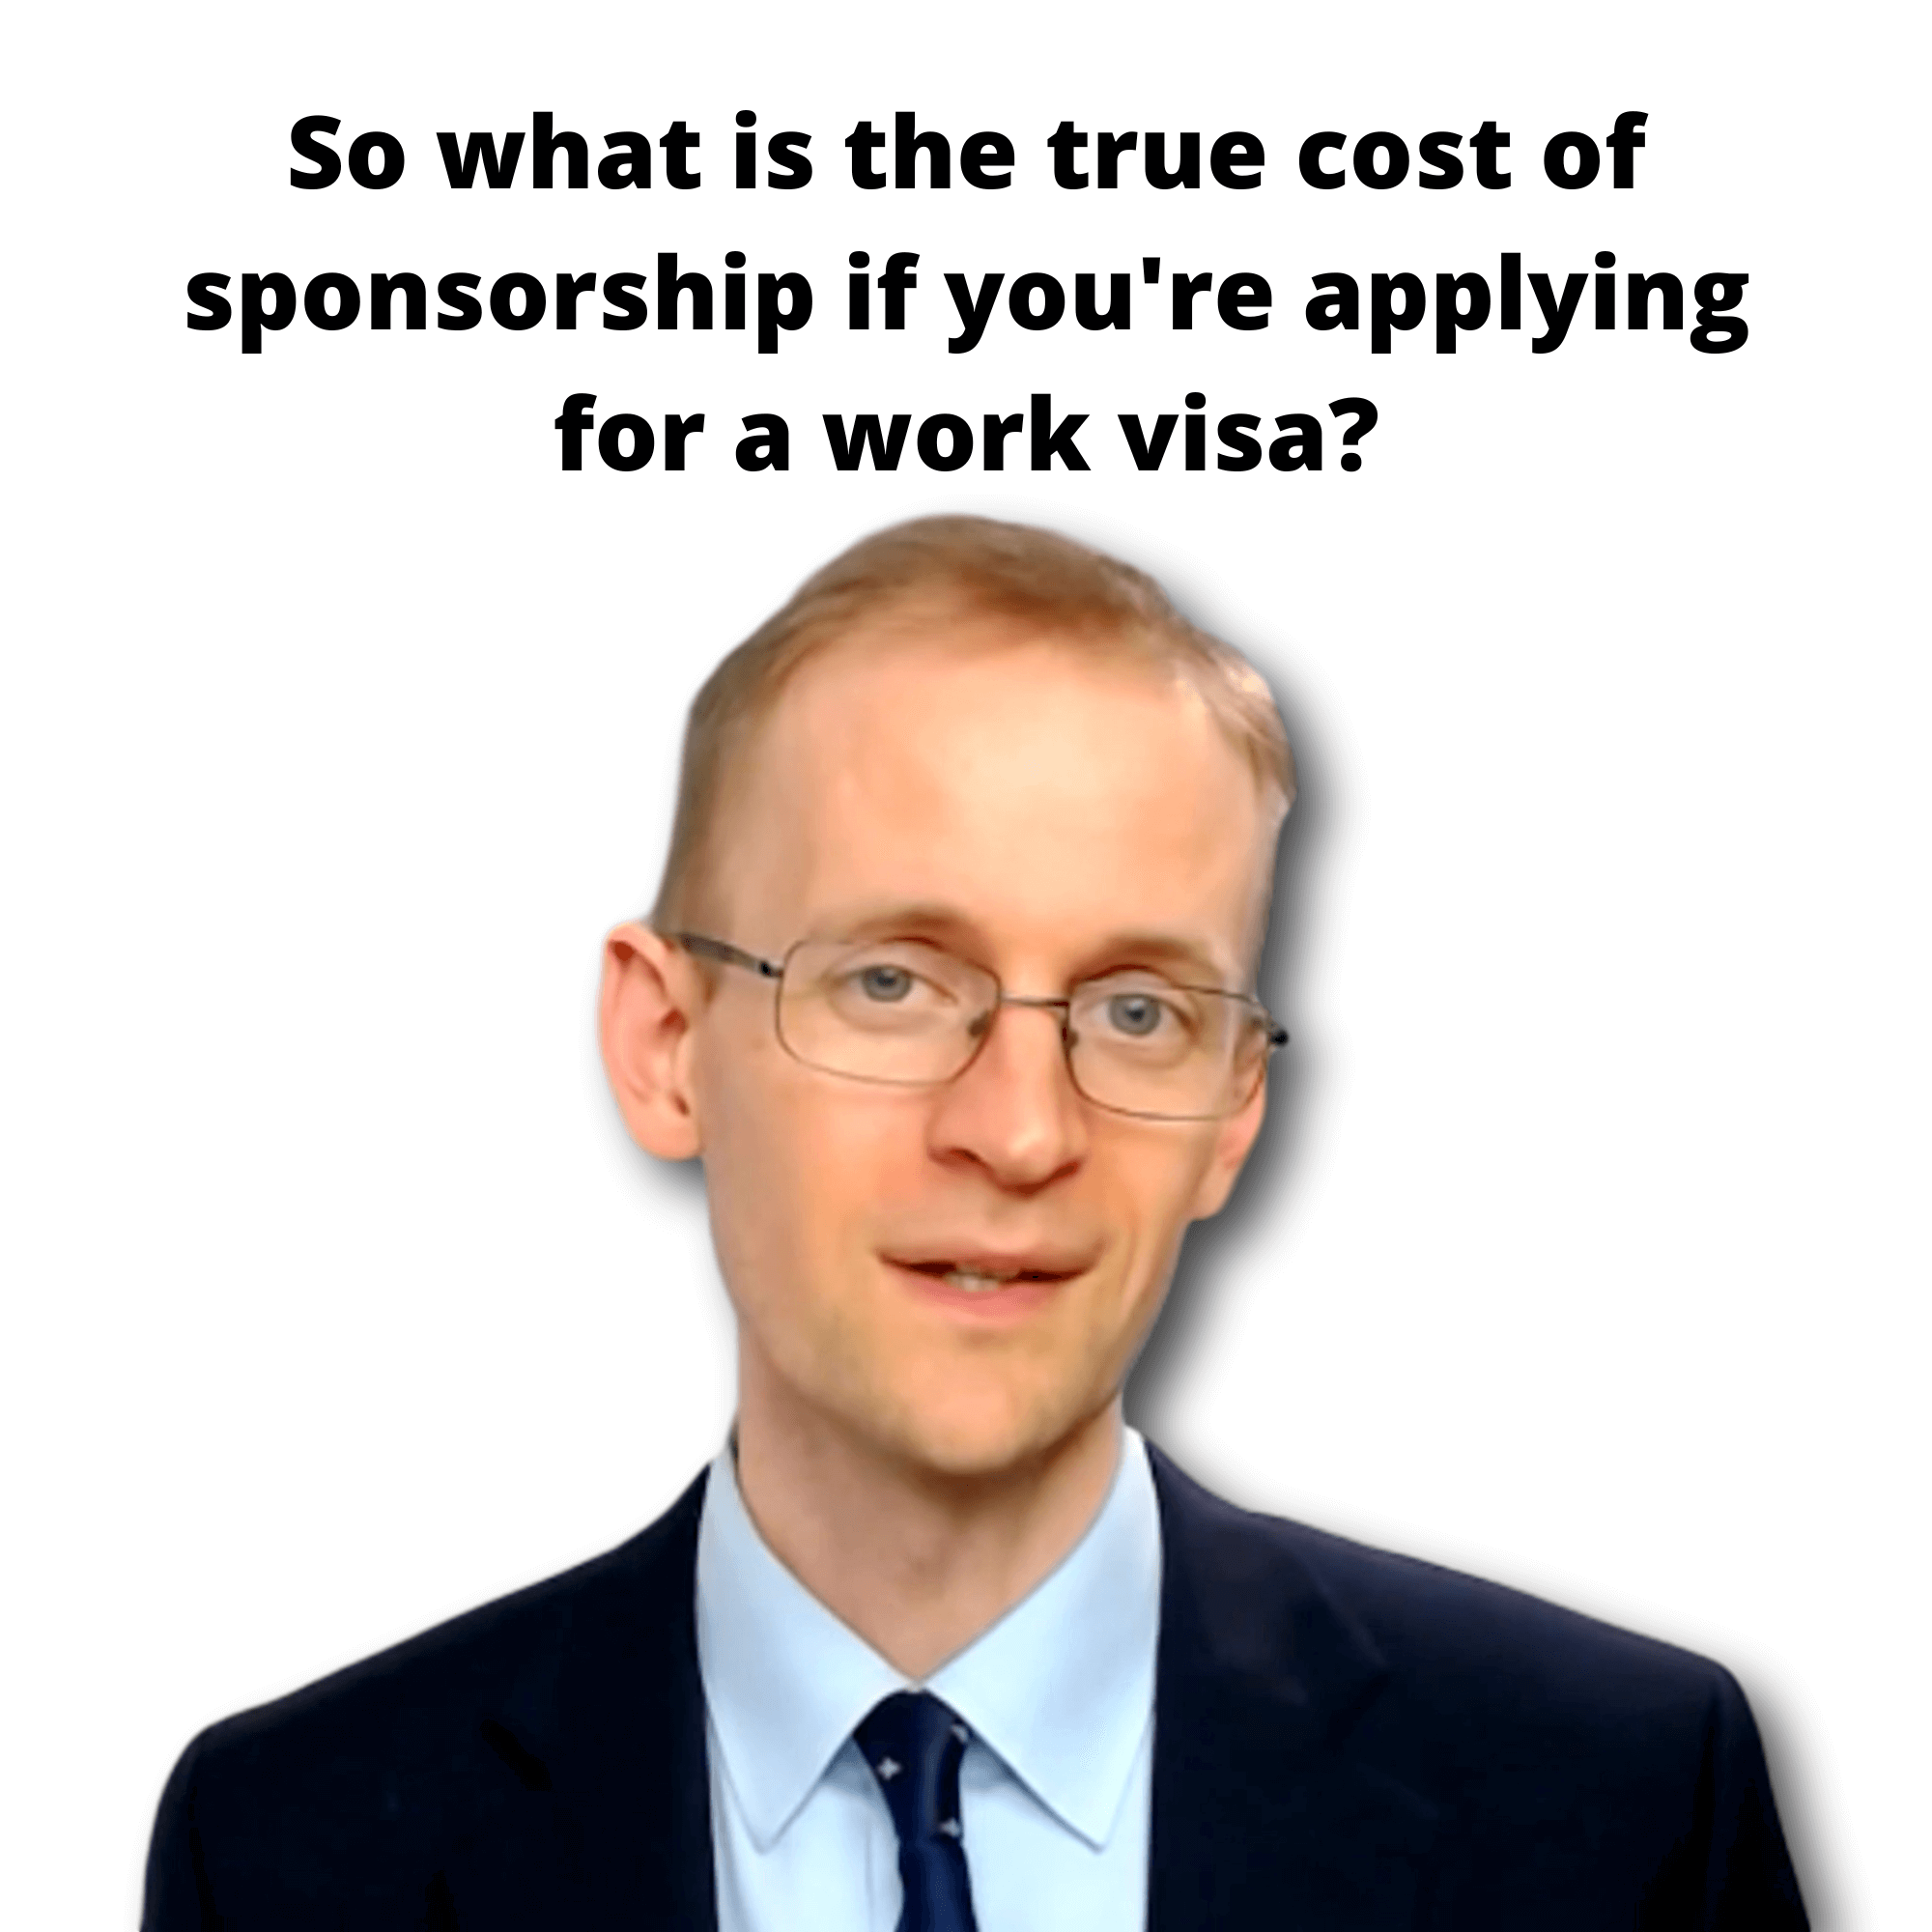 60 The real cost of work visa sponsorship